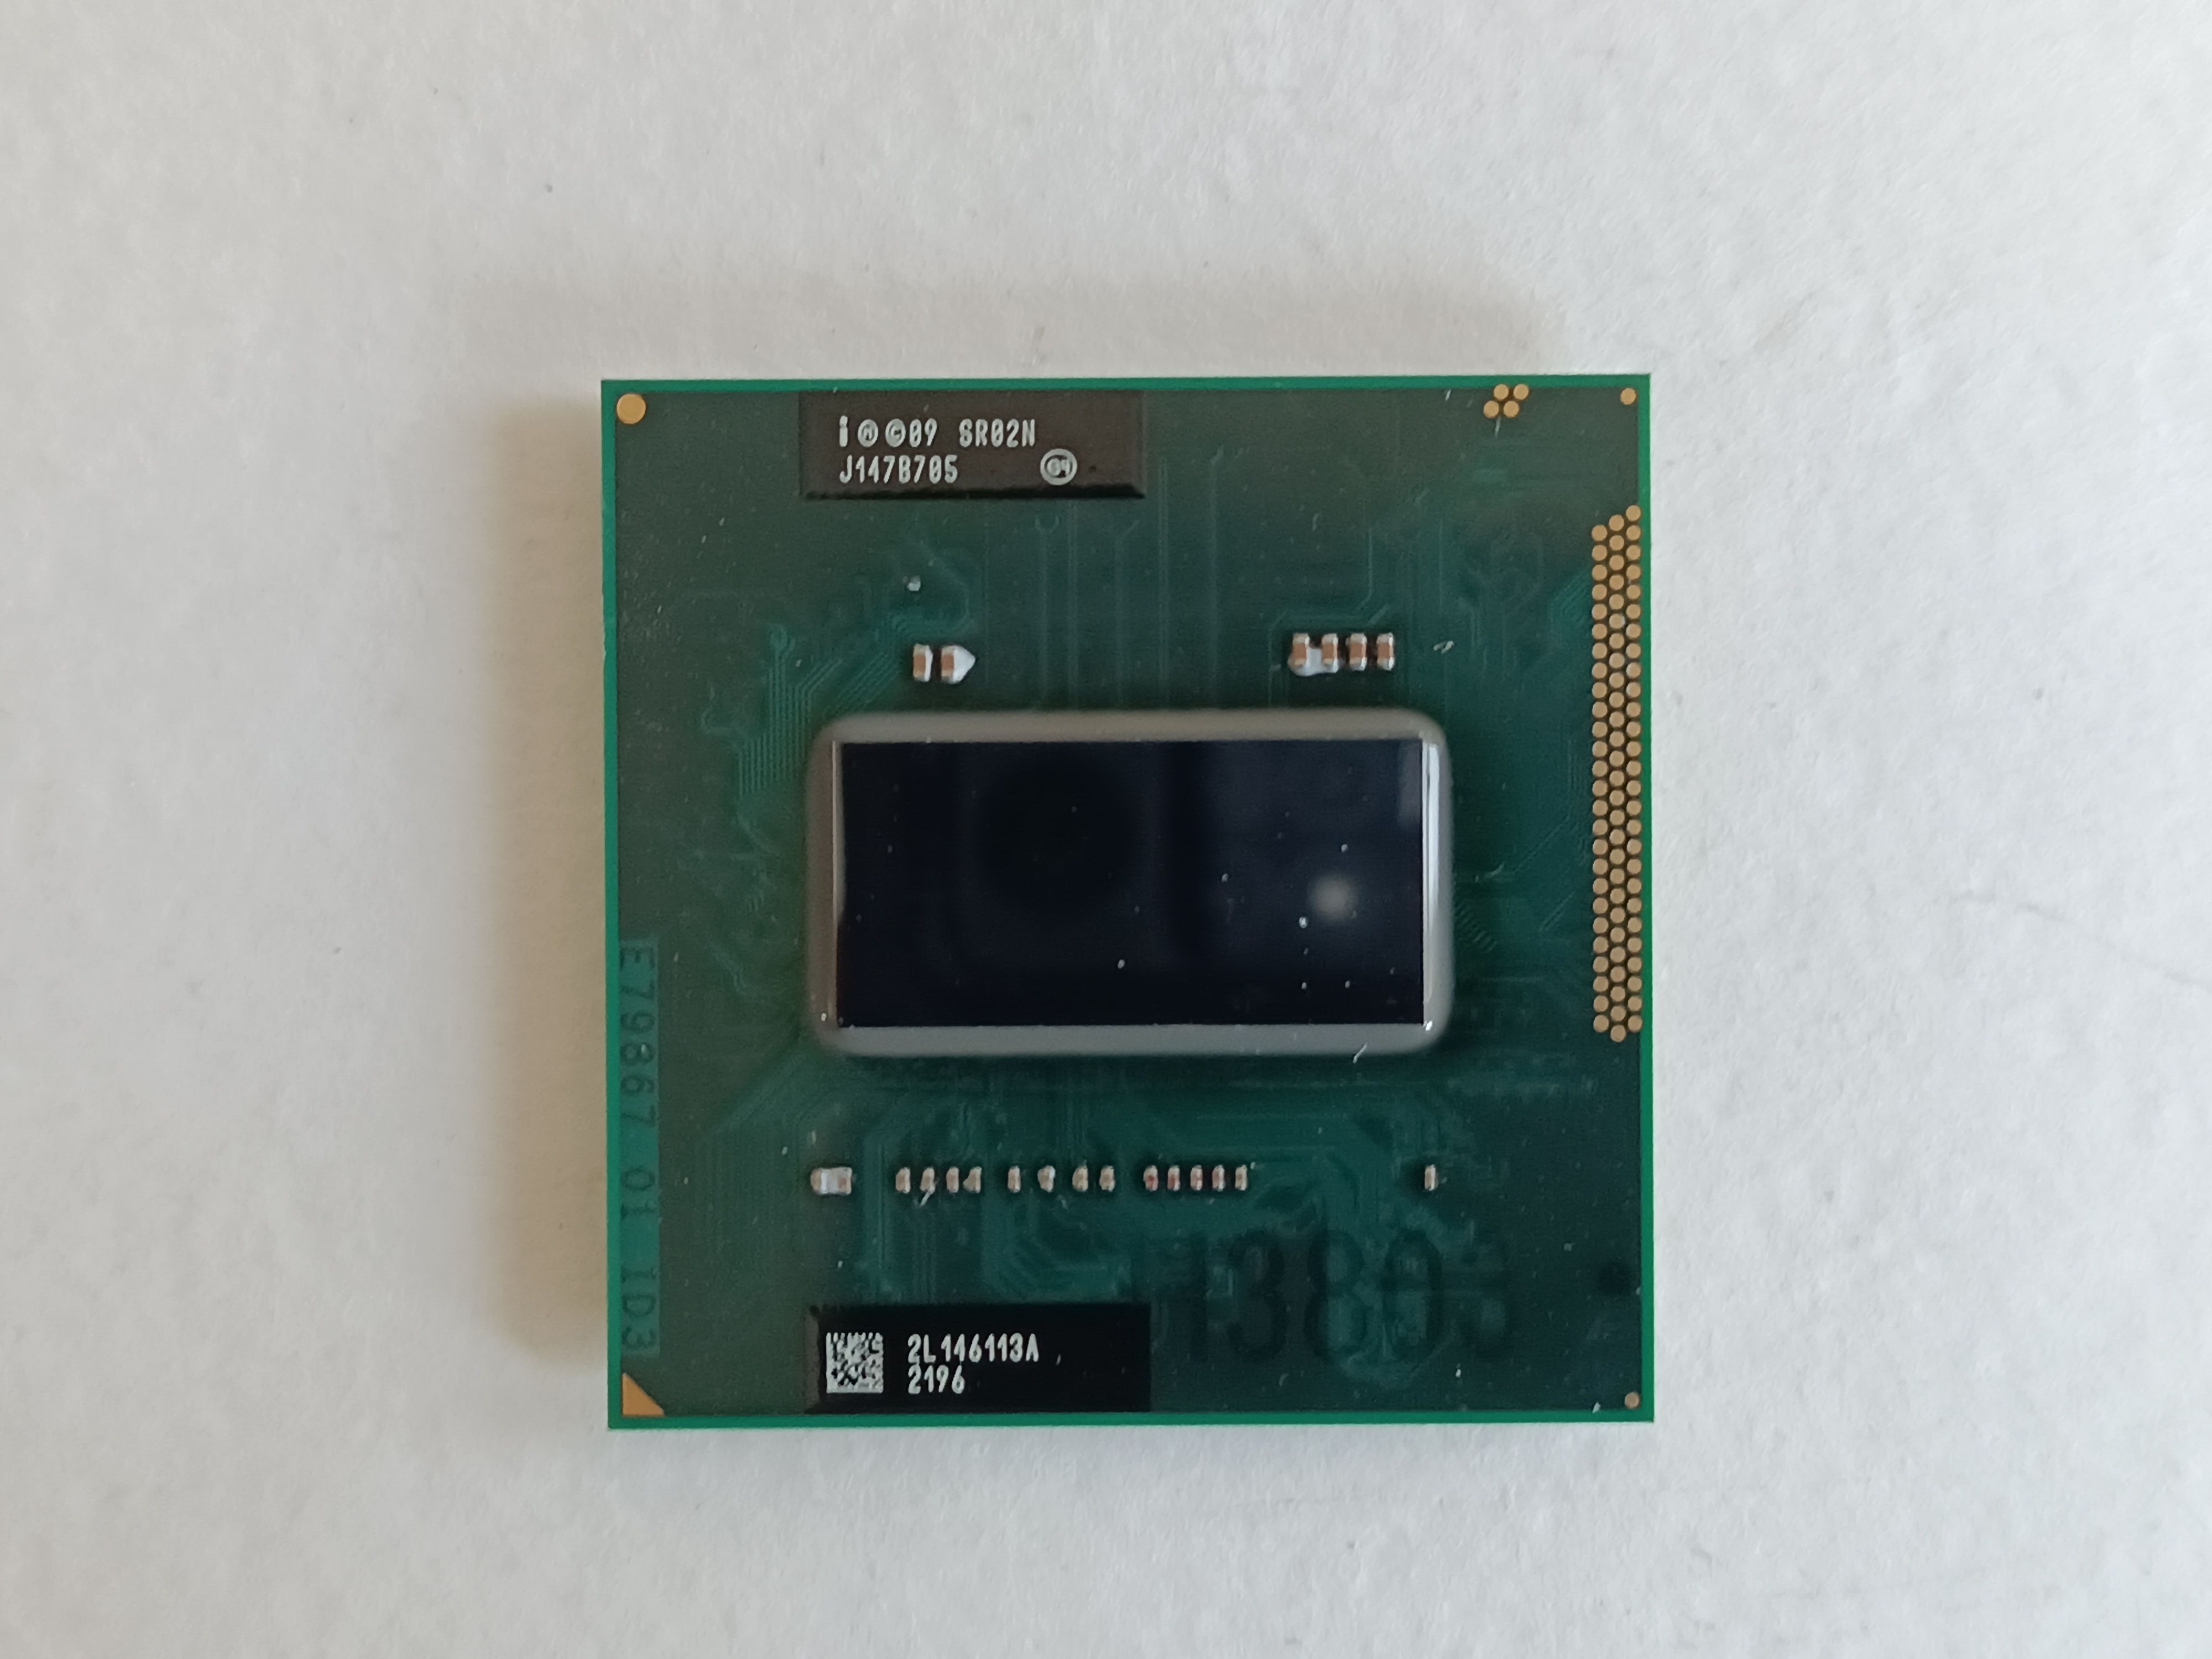 Intel core i7 2640m. Sr02n Intel Core i7-2670qm. Pga988 процессоры.